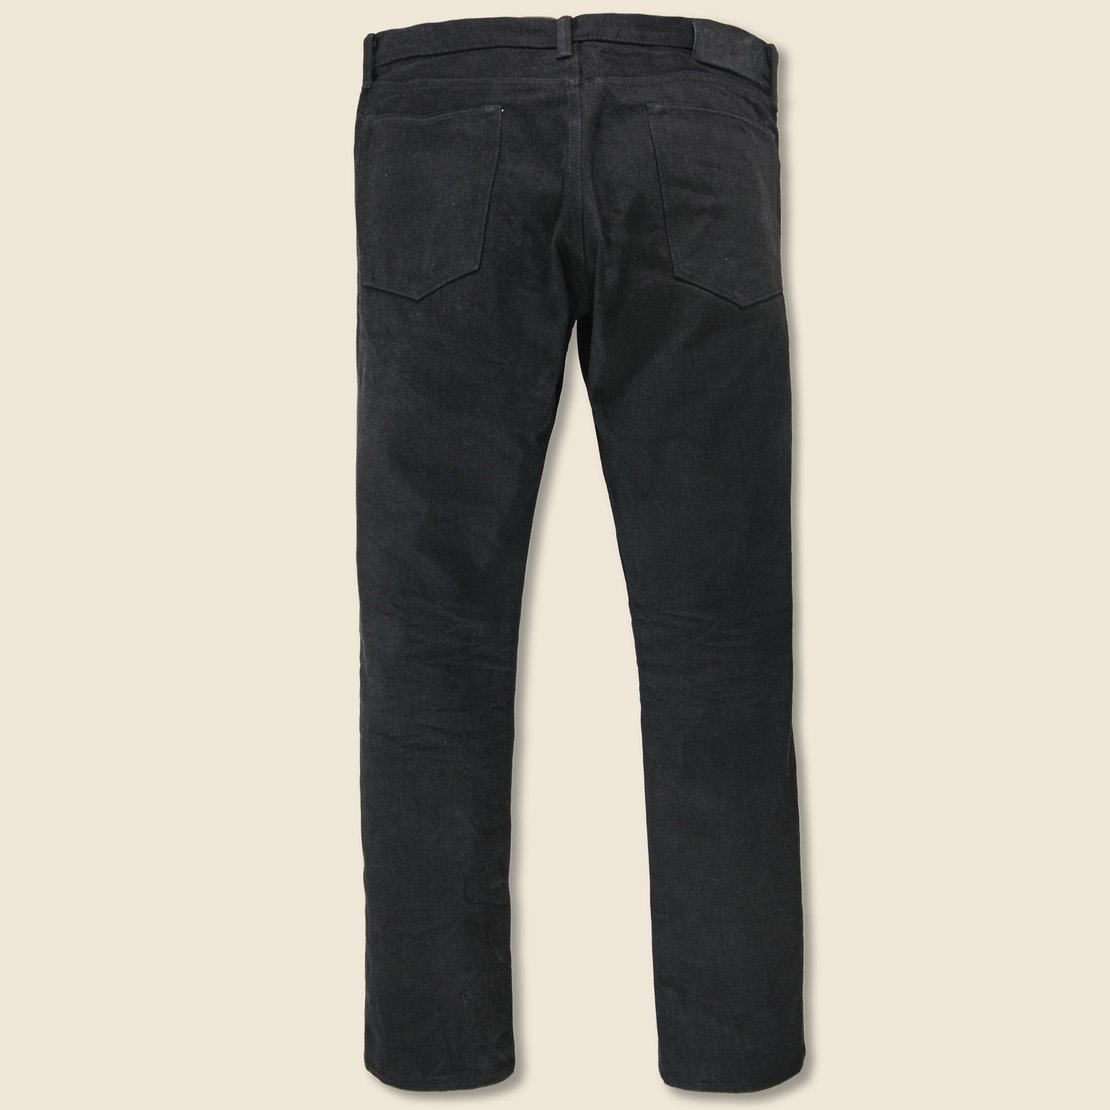 Slim Fit Jean - Black on Black - RRL - STAG Provisions - Pants - Denim